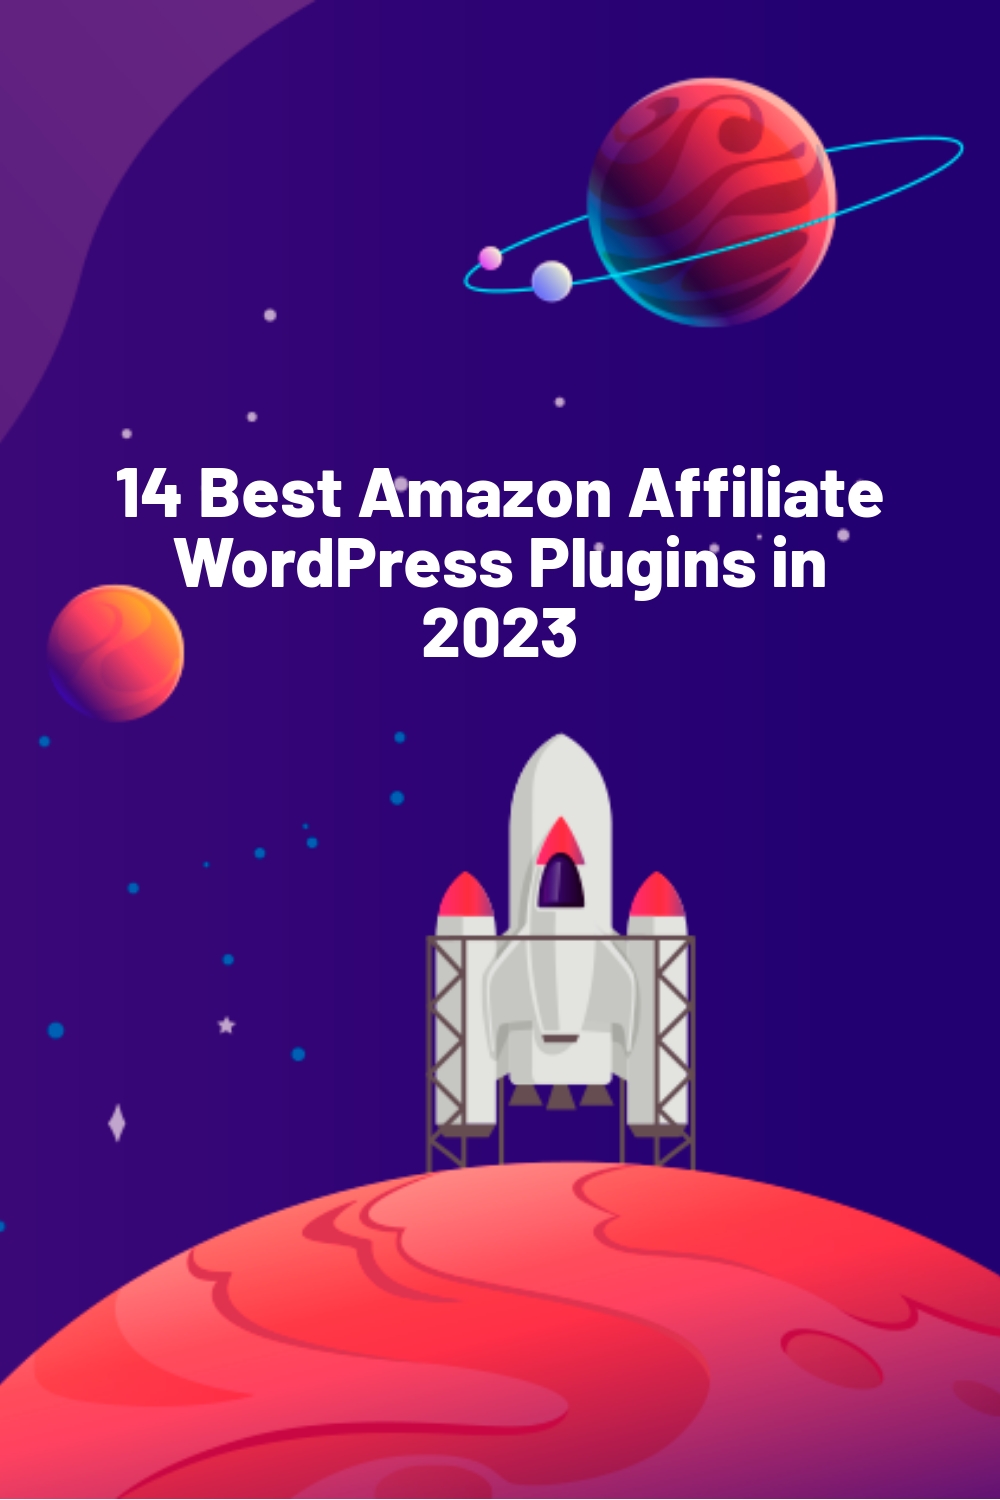 14 Best Amazon Affiliate WordPress Plugins in 2023